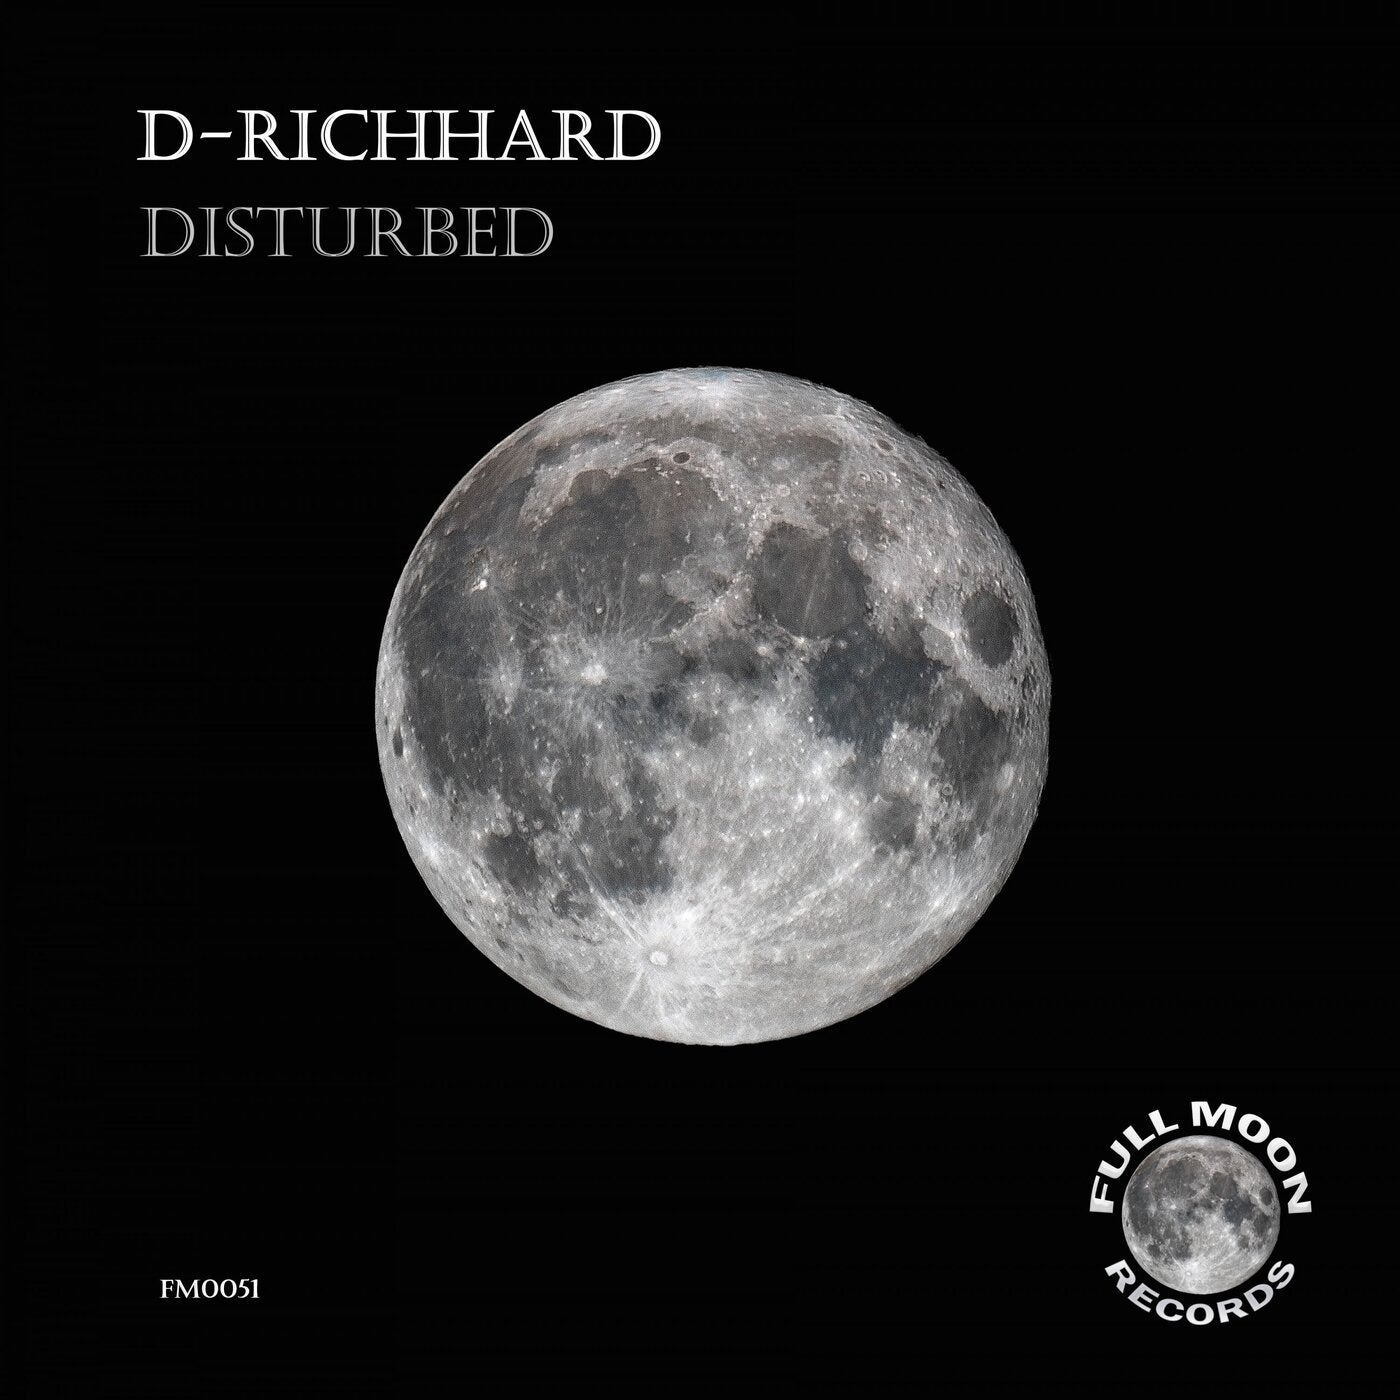 D-Richhard - Disturbed [Full Moon Records]